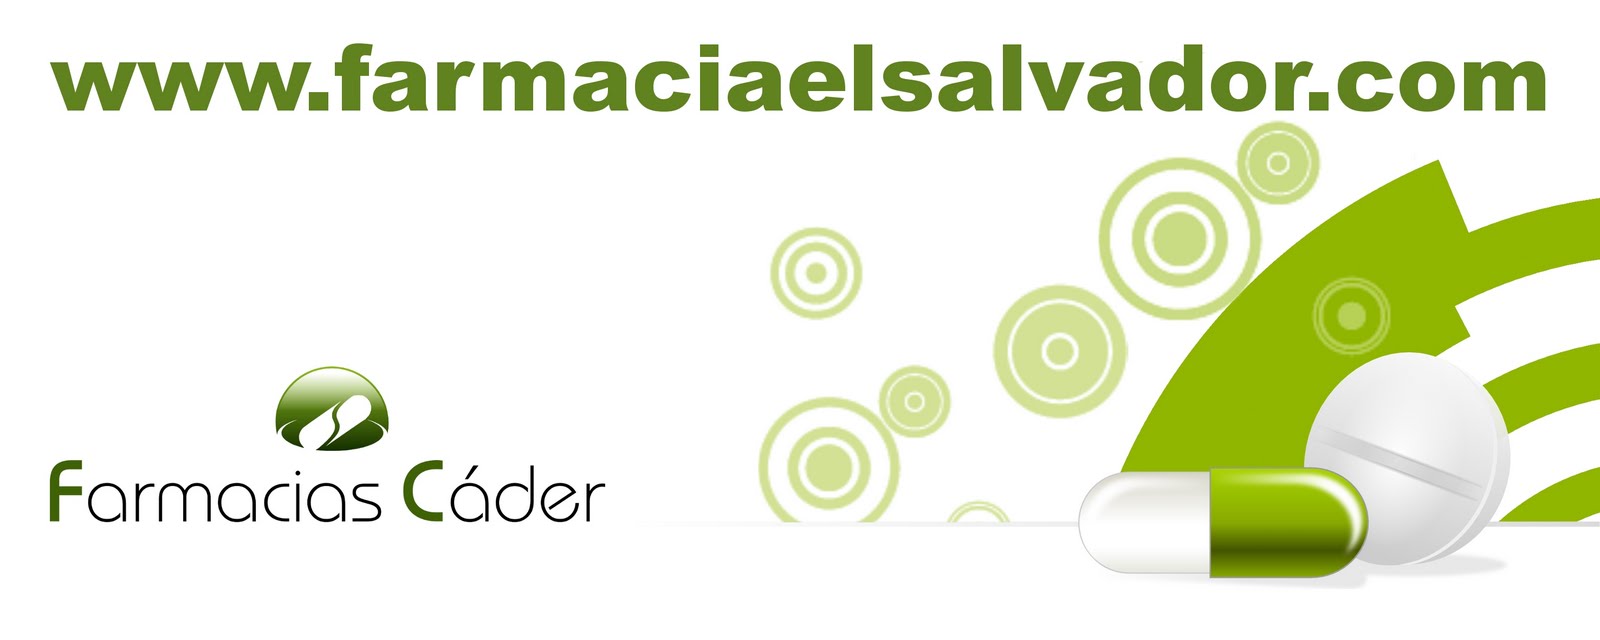 www.farmaciaelsalvador.com